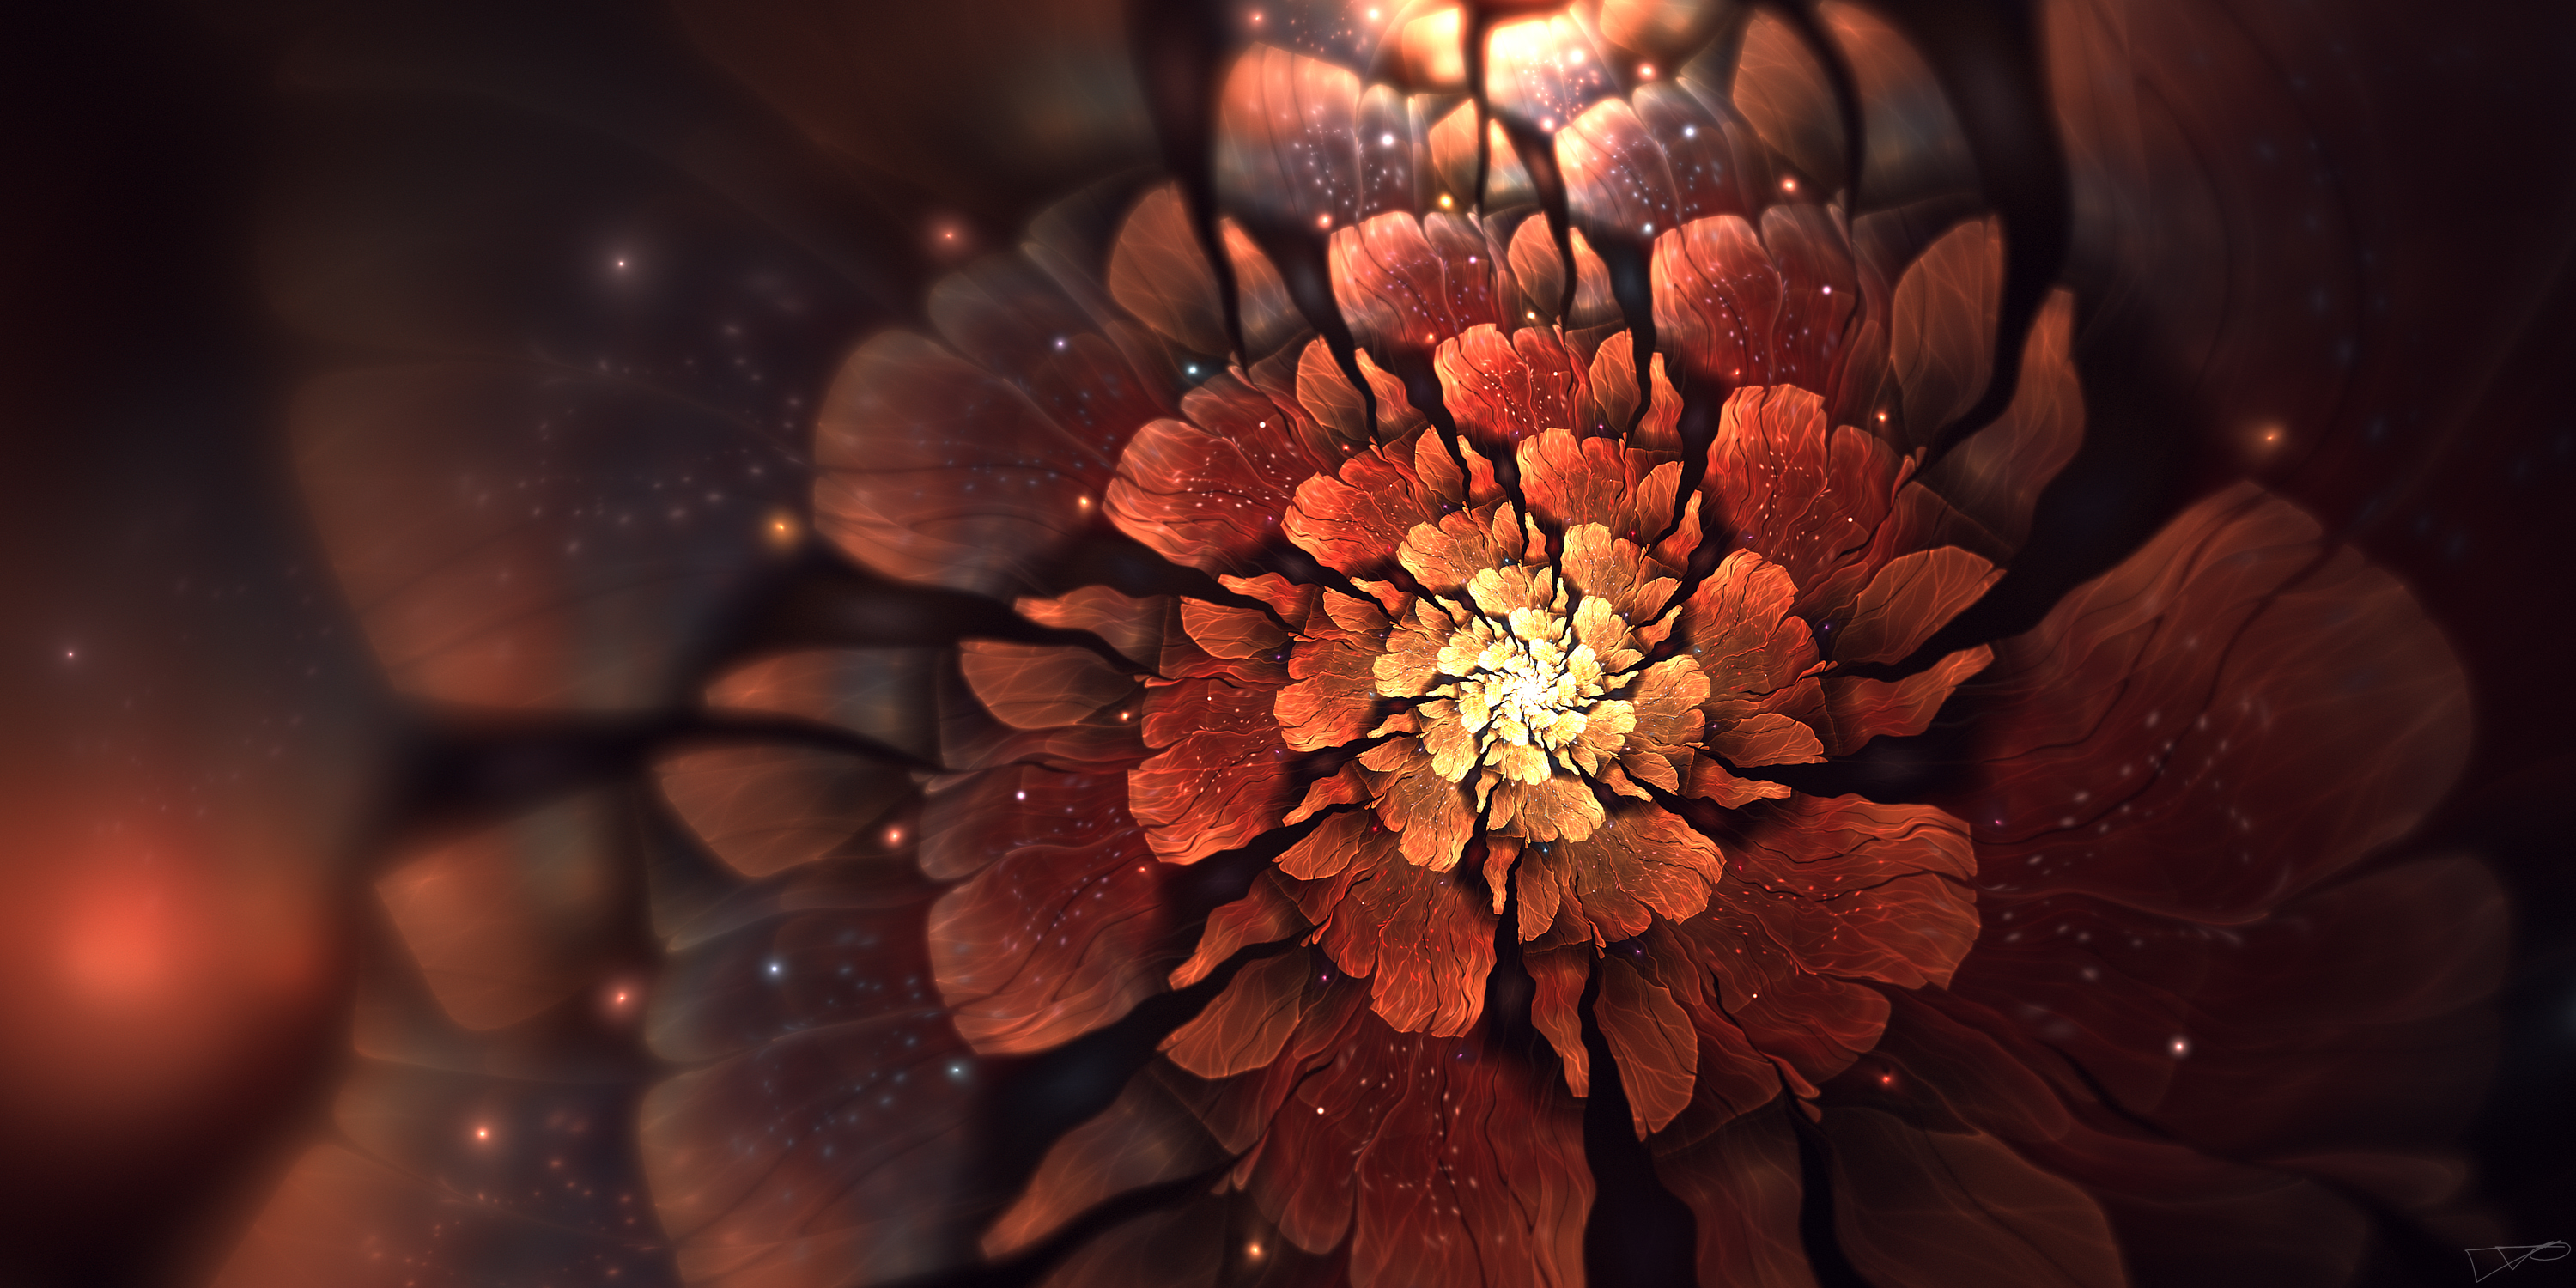 Abstract Blurred Fractal Flowers Fractal Geometry Recursion CGi Digital Art 3000x1500